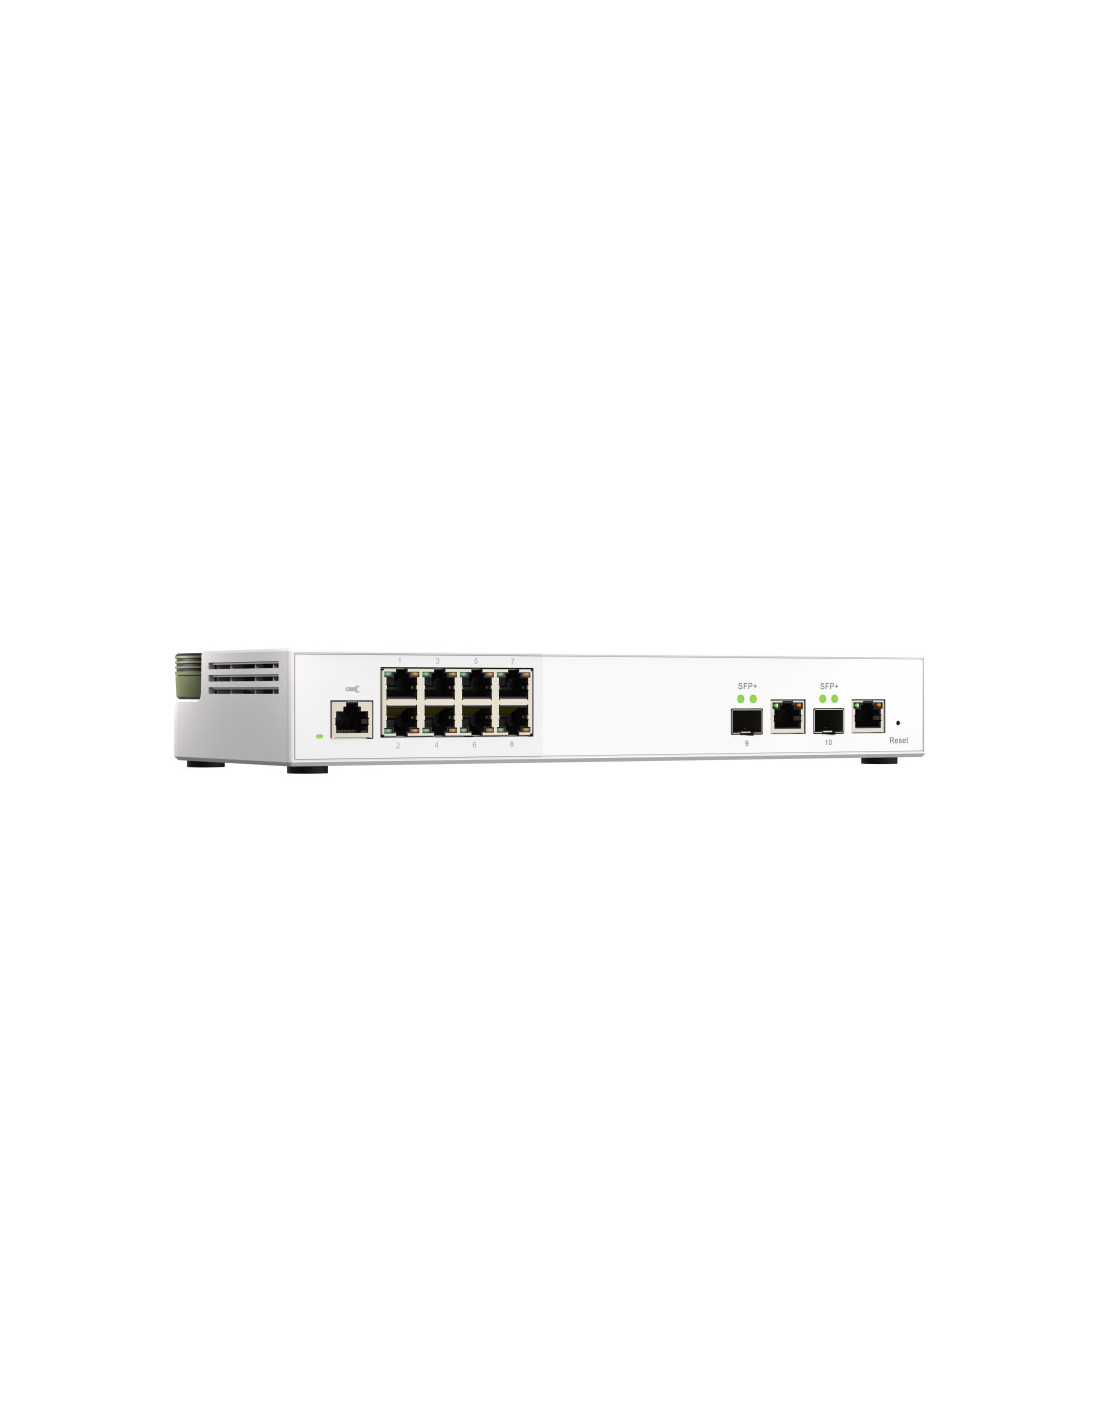 Switch  es  QSW-M2108-2C Switch 10GbE - 10 puertos (8 RJ45, 2 combo SFP+ RJ45), agregación de puertos 802.3ad